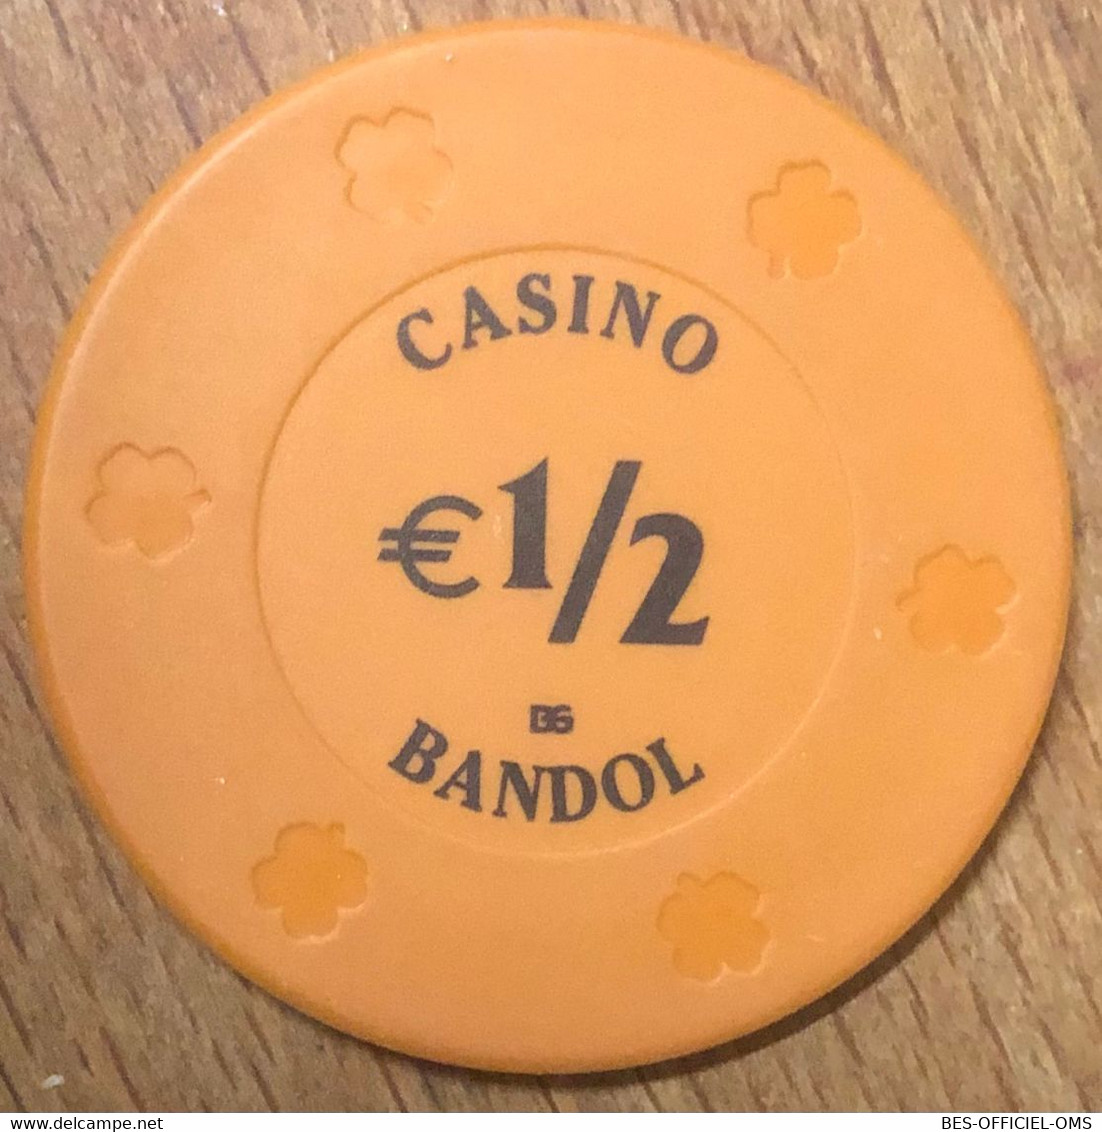 83 BANDOL CASINO JETON DE 1/2 EURO CHIPS TOKENS COINS GAMING - Casino